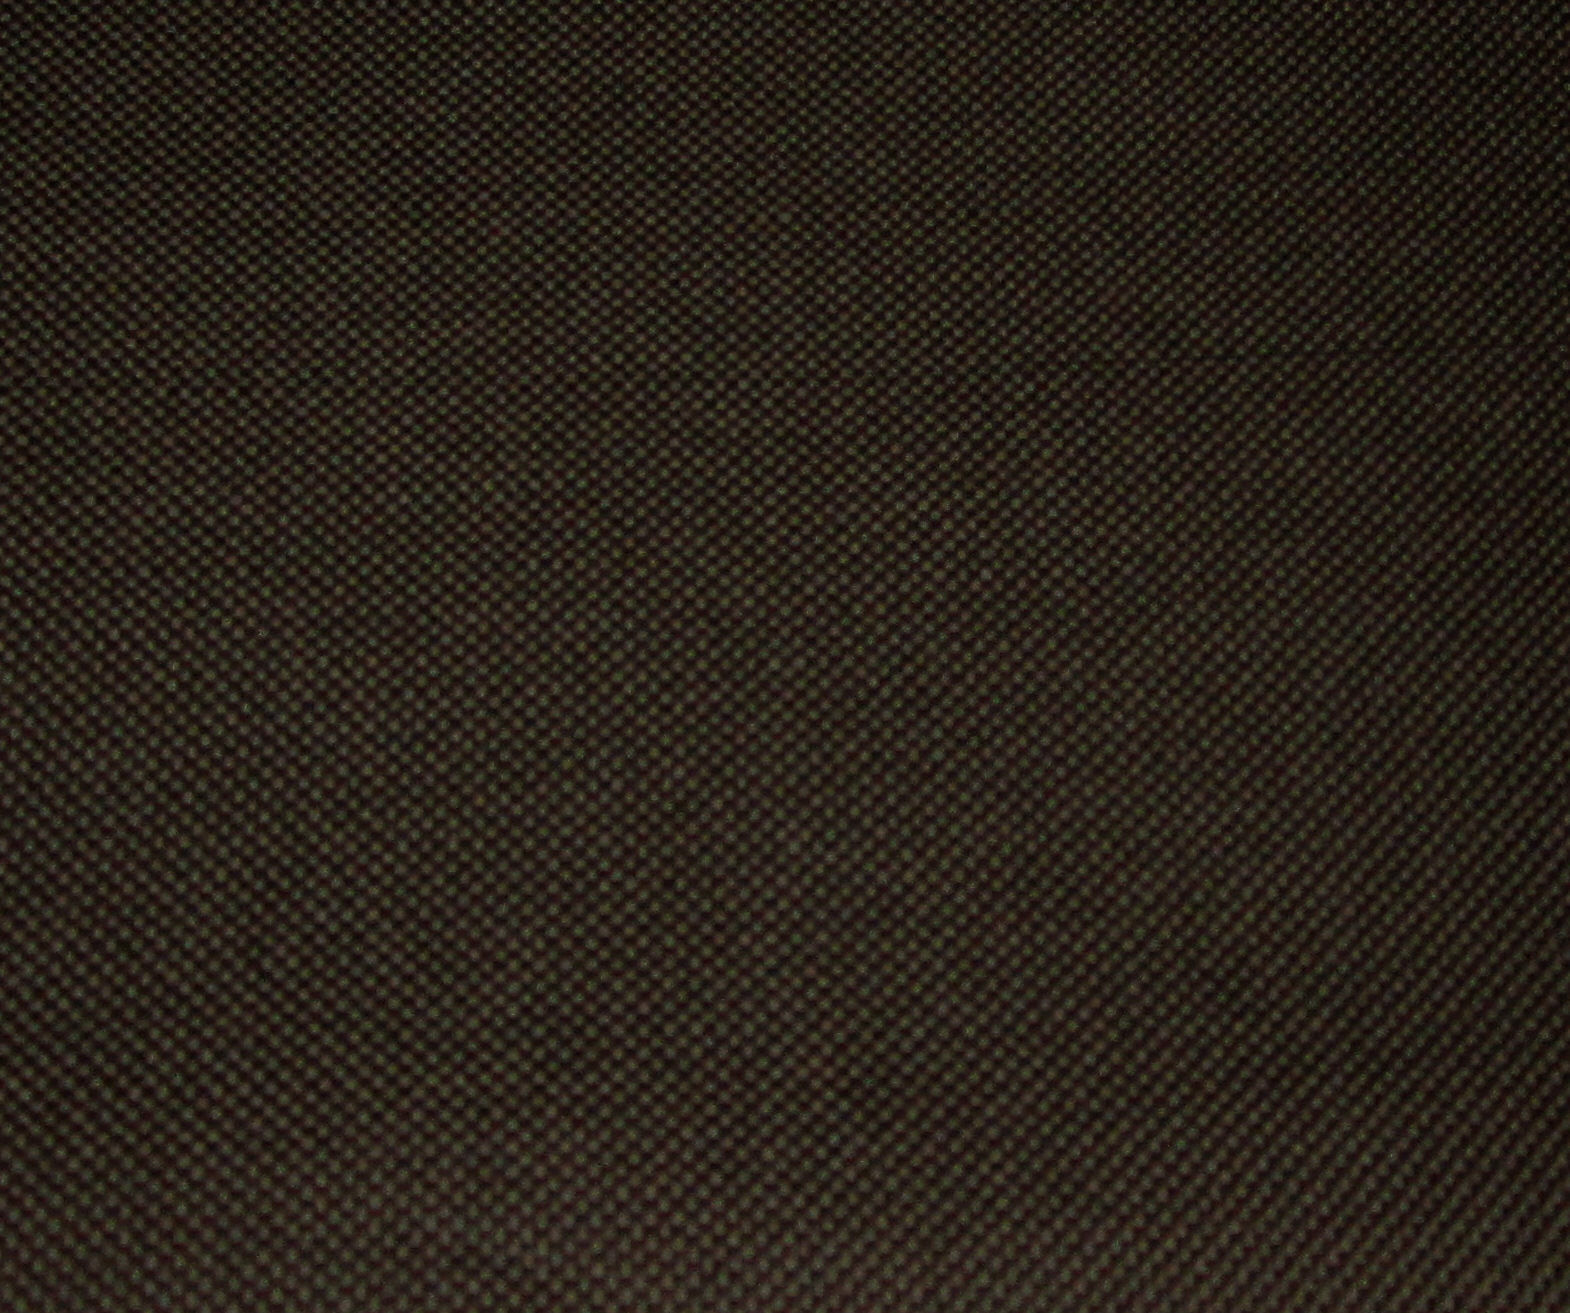 1 yard of BROWN HARDANGER ZWEIGART 100% cotton fabric